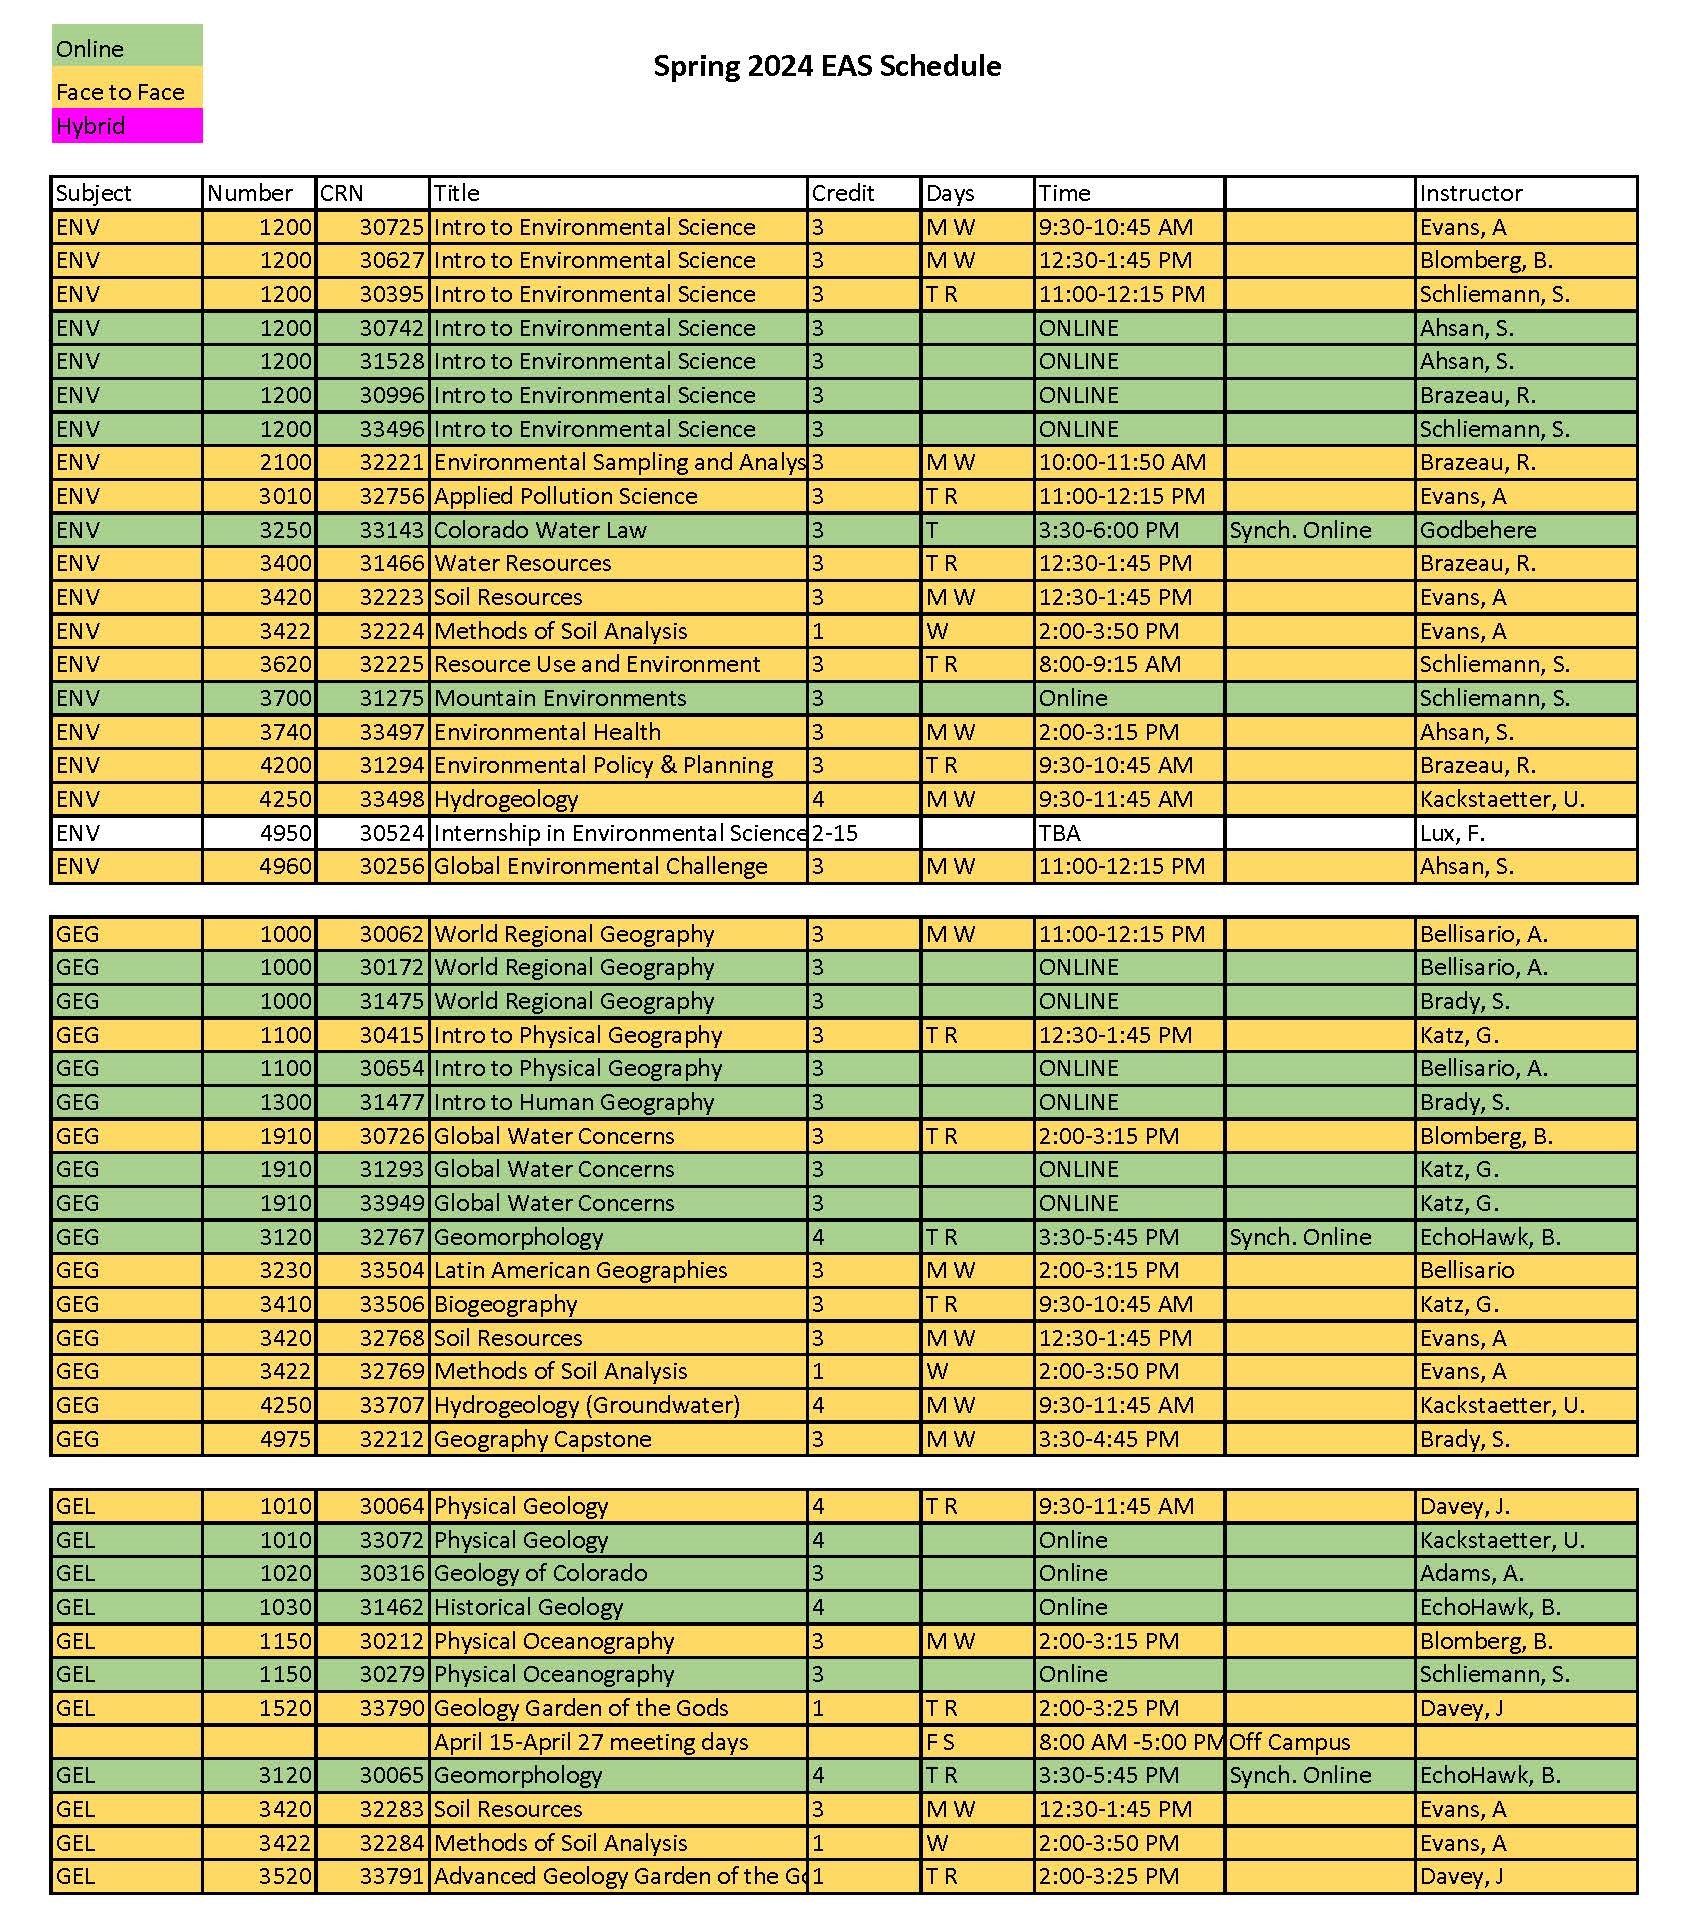 EAS Spring 2024 schedule part 1